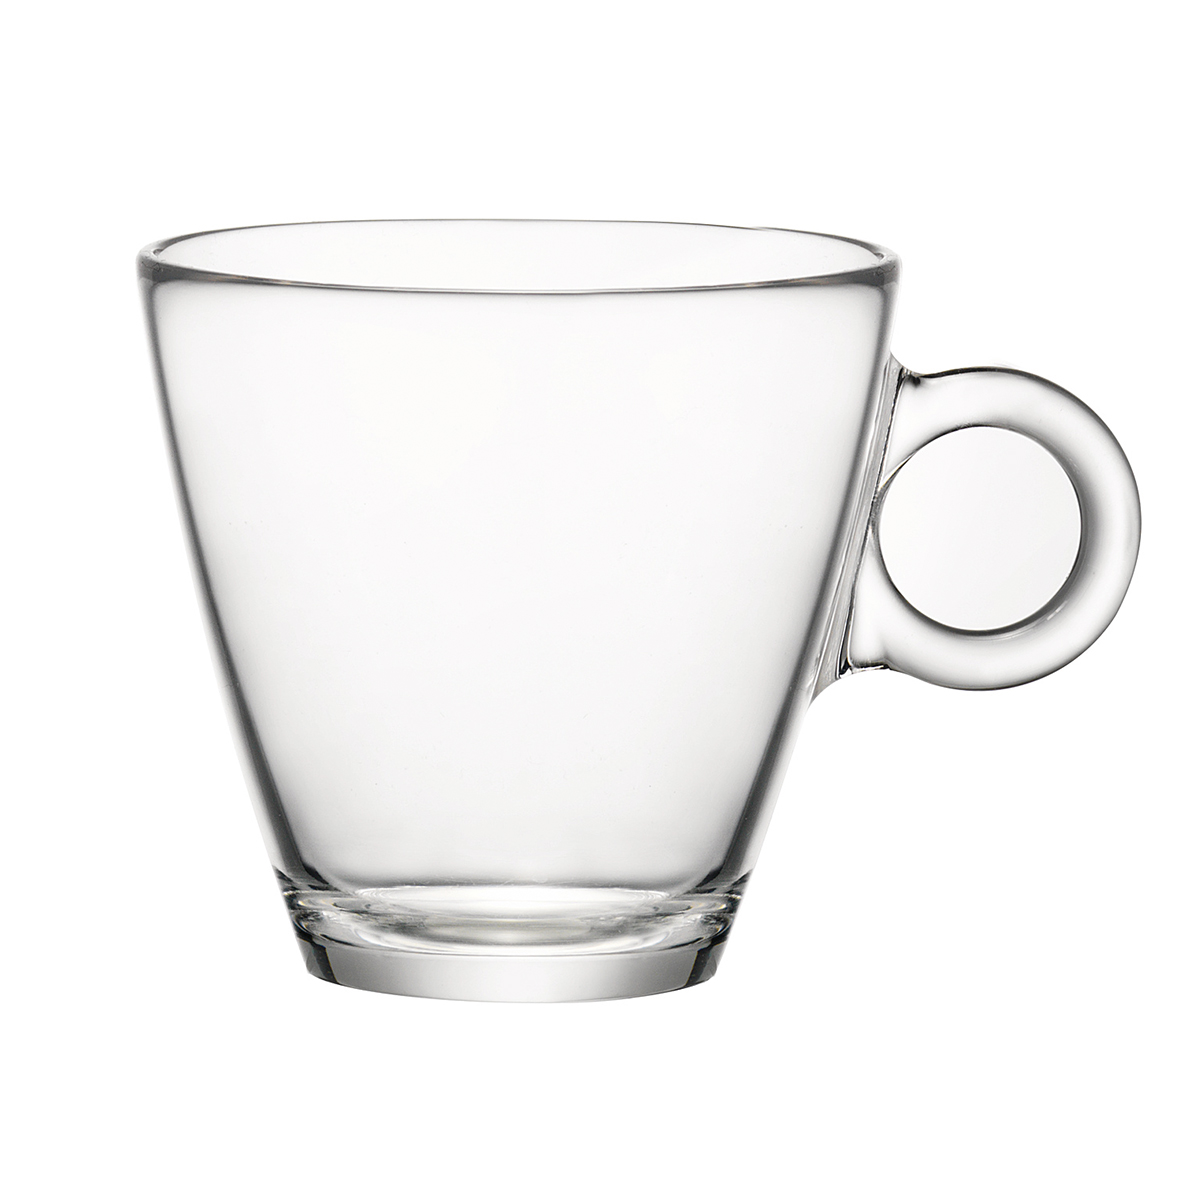 Son buenas las tazas de café de vidrio de borosilicato? - Cafelab